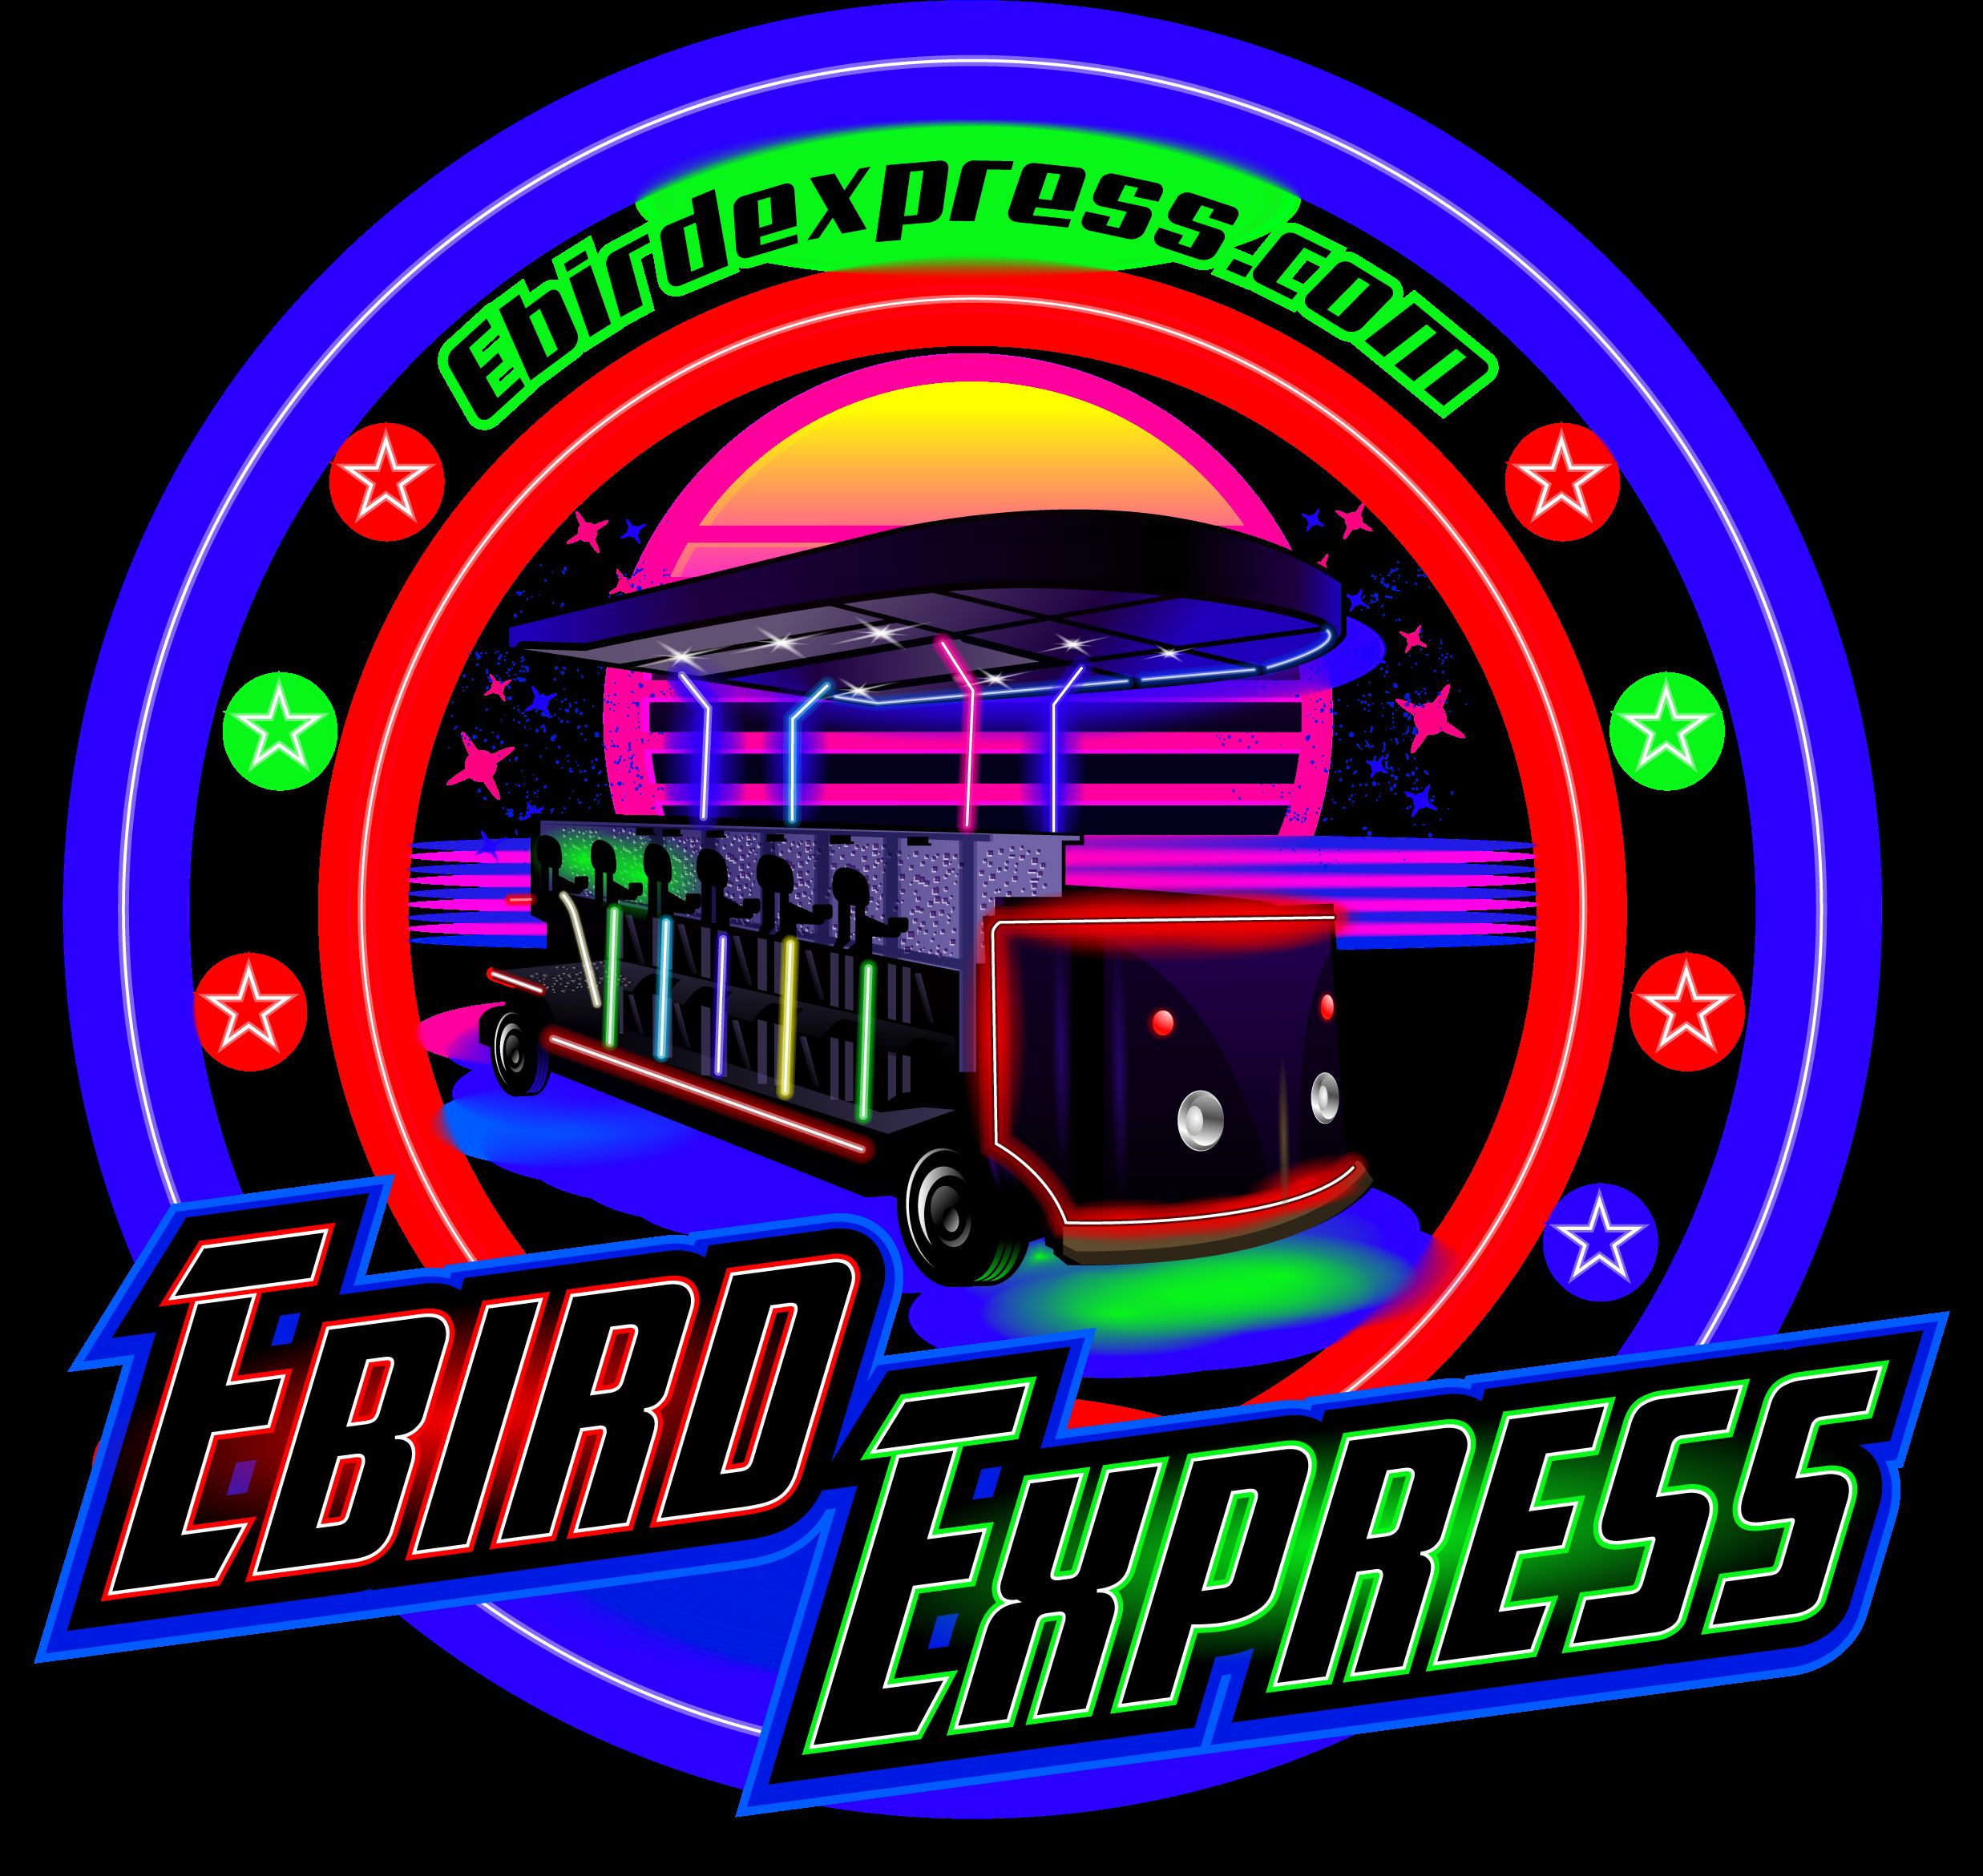 Ebird Express - Pedal Party Bike Photo